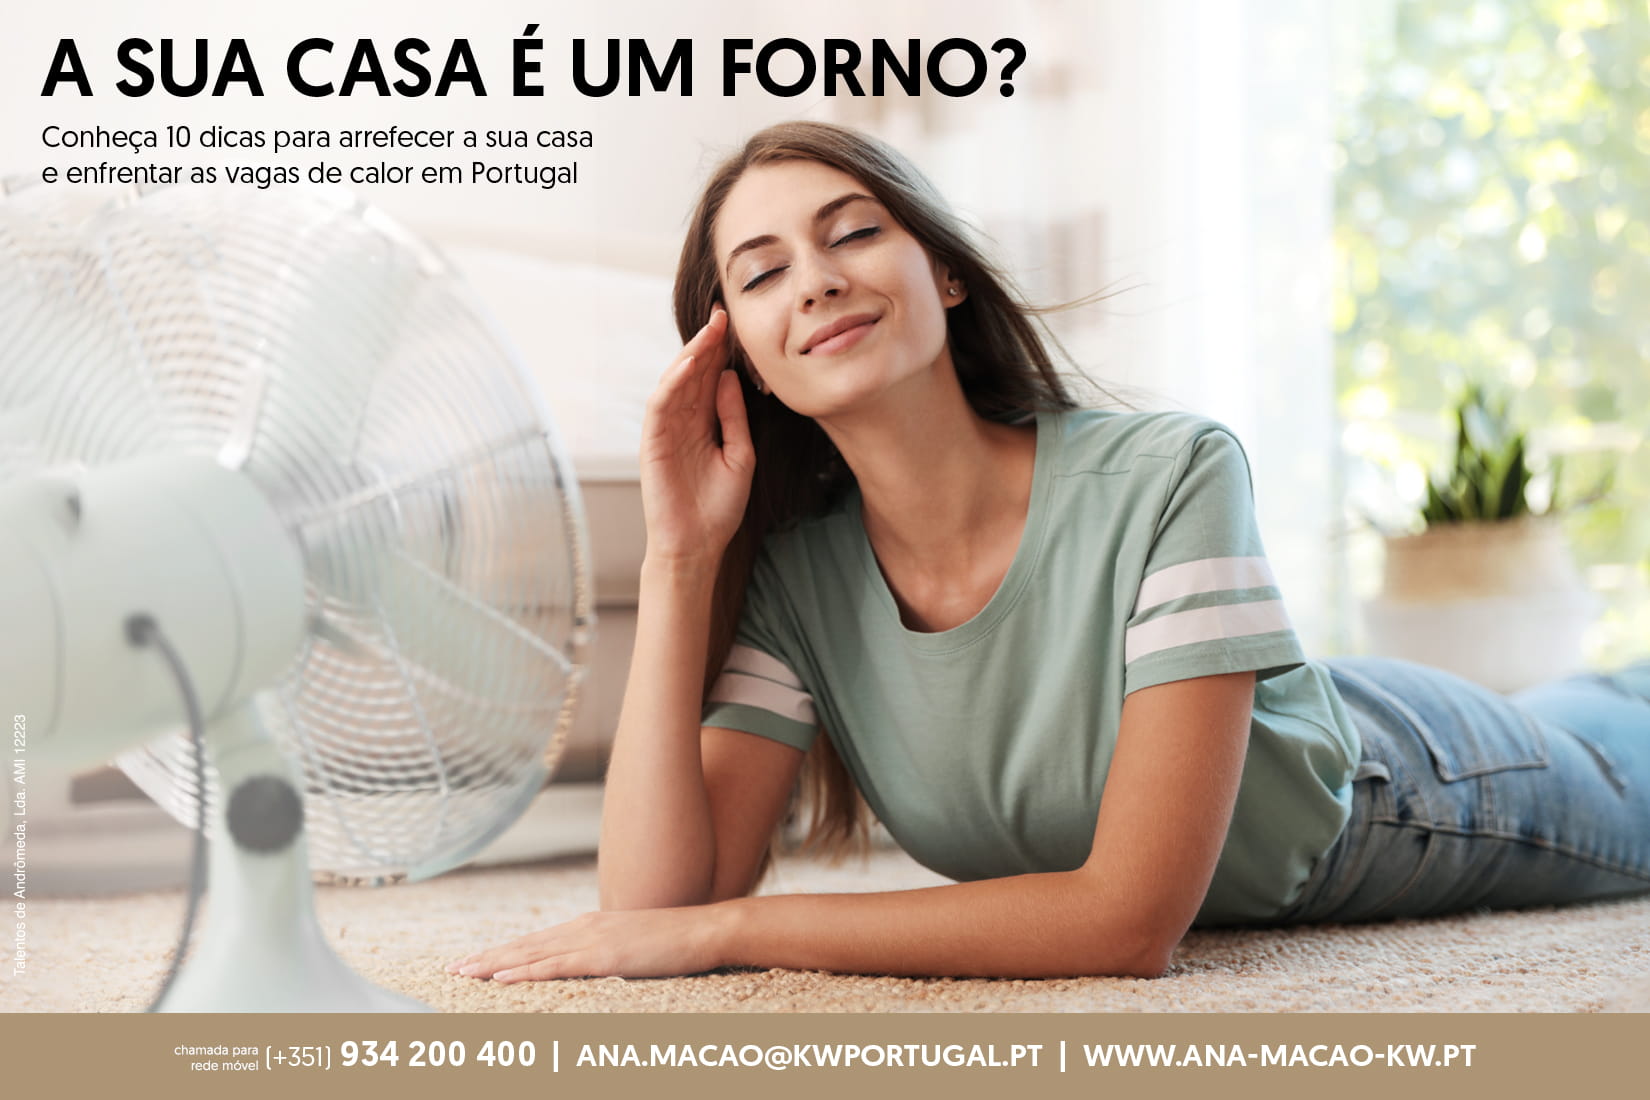 Daikin Portugal no LinkedIn: Campanha Verão 2023 - Stylish